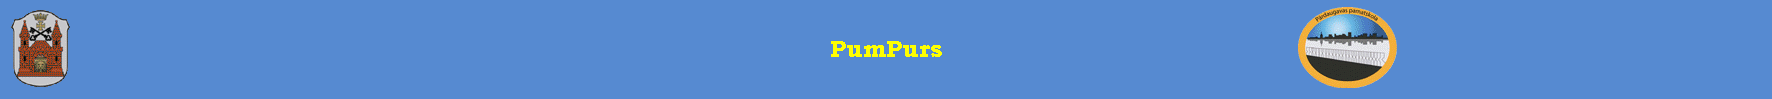 PumPurs